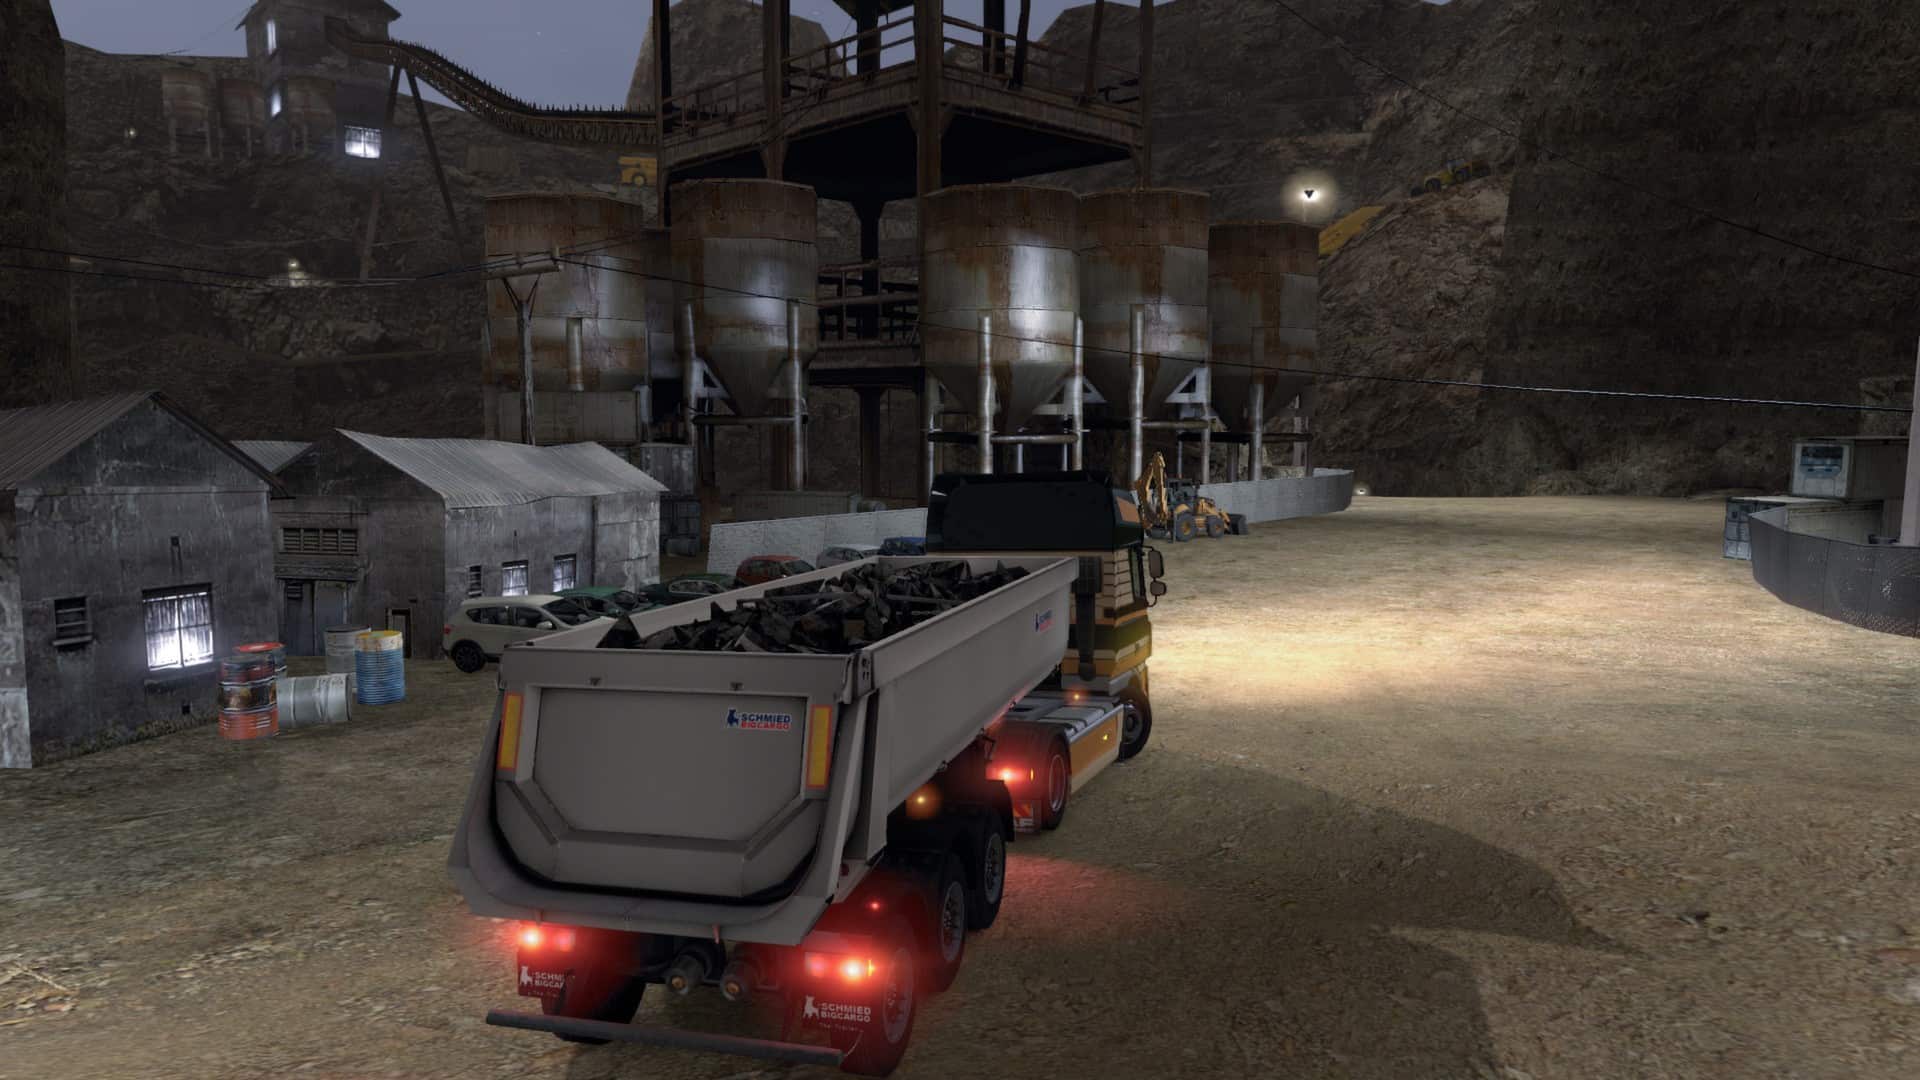 euro truck simulator 3 free download for pc